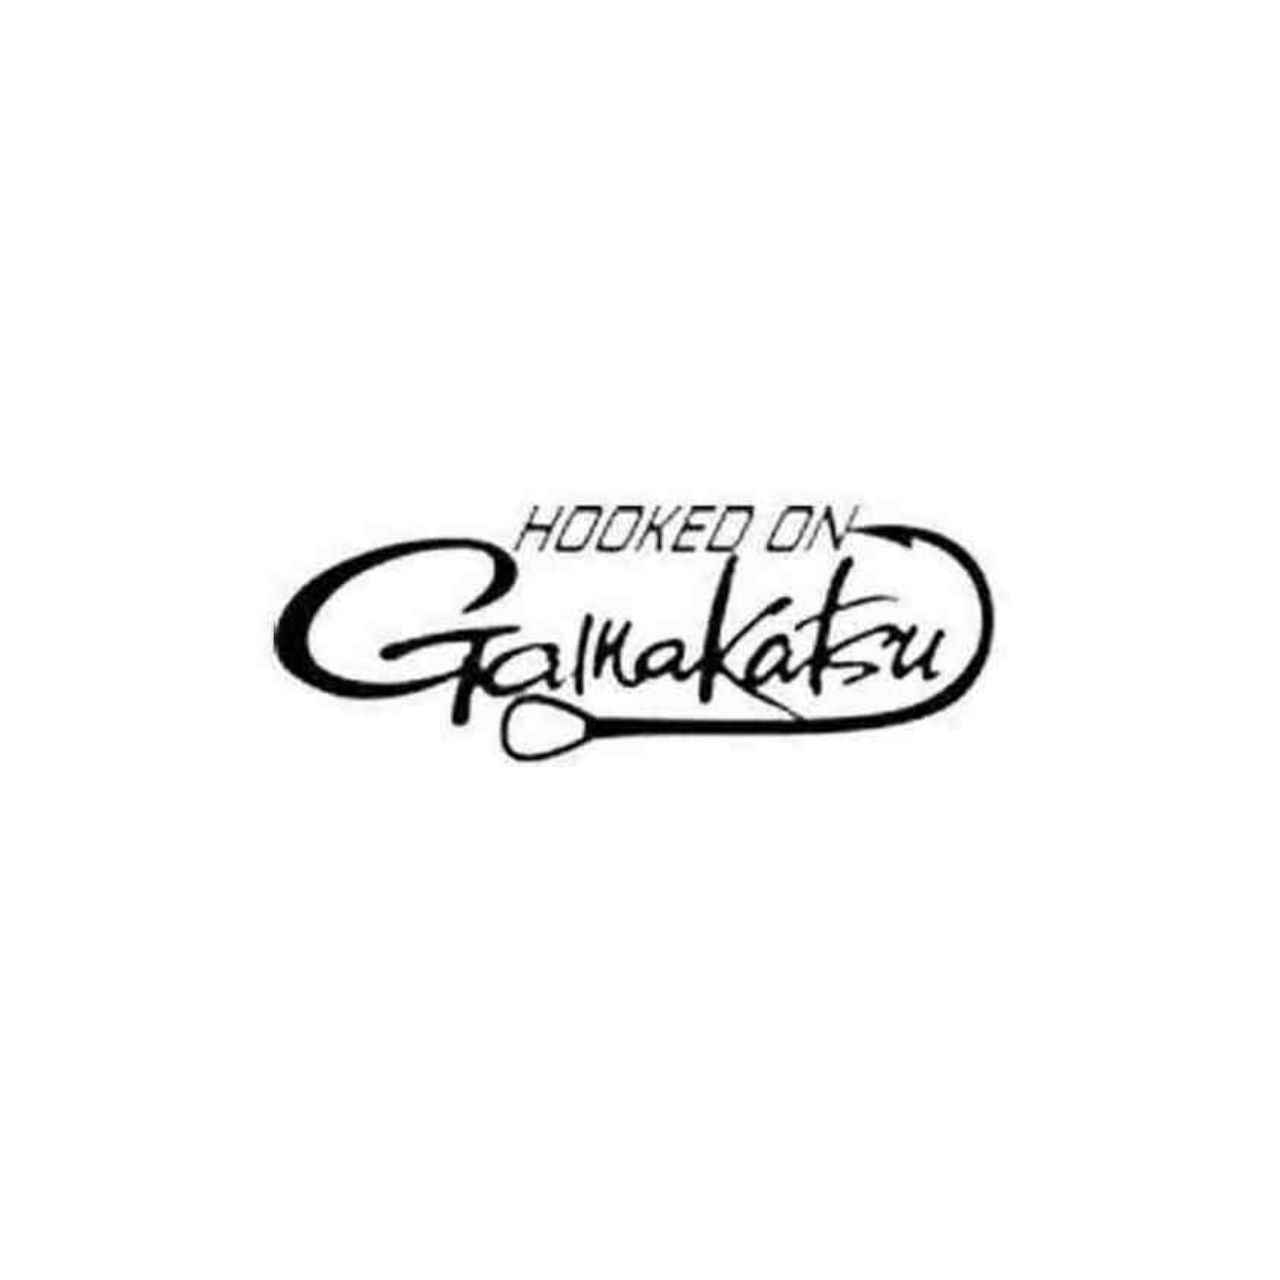 Gamakatsu Logo - Hooked On Gamakatsu Fishing Die Cut Decal Sticker